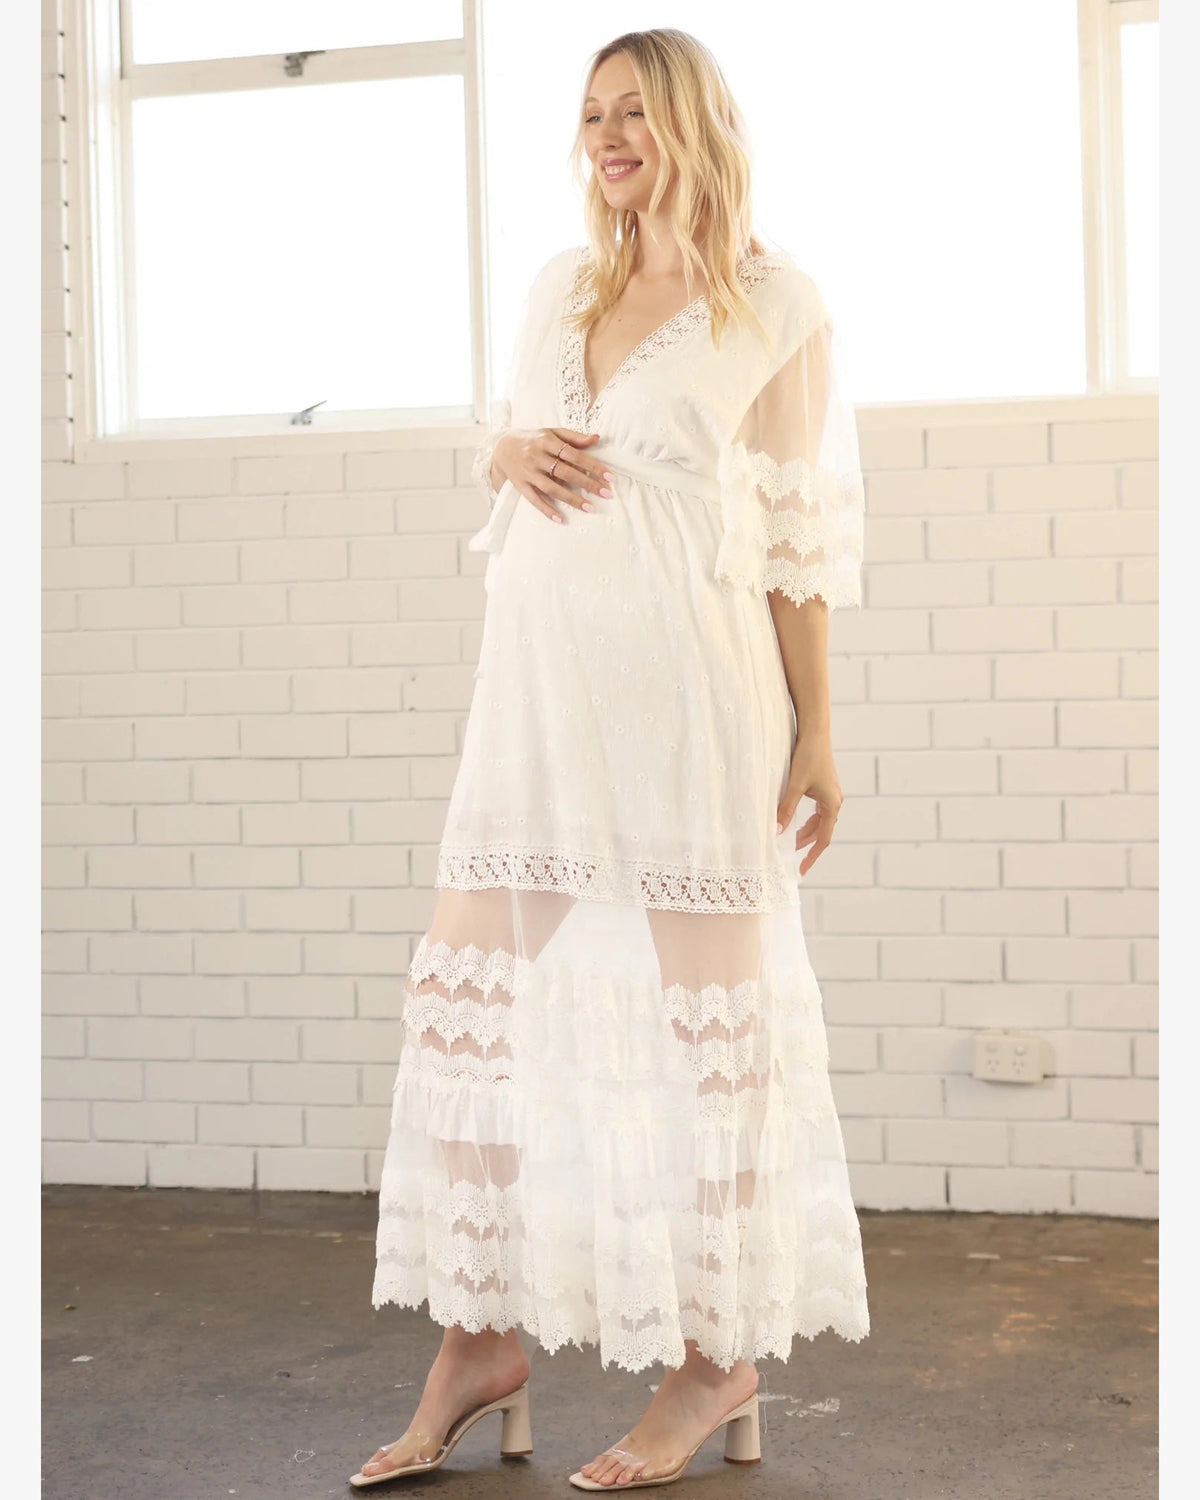 Roxy Lace Baby Shower Dress - White